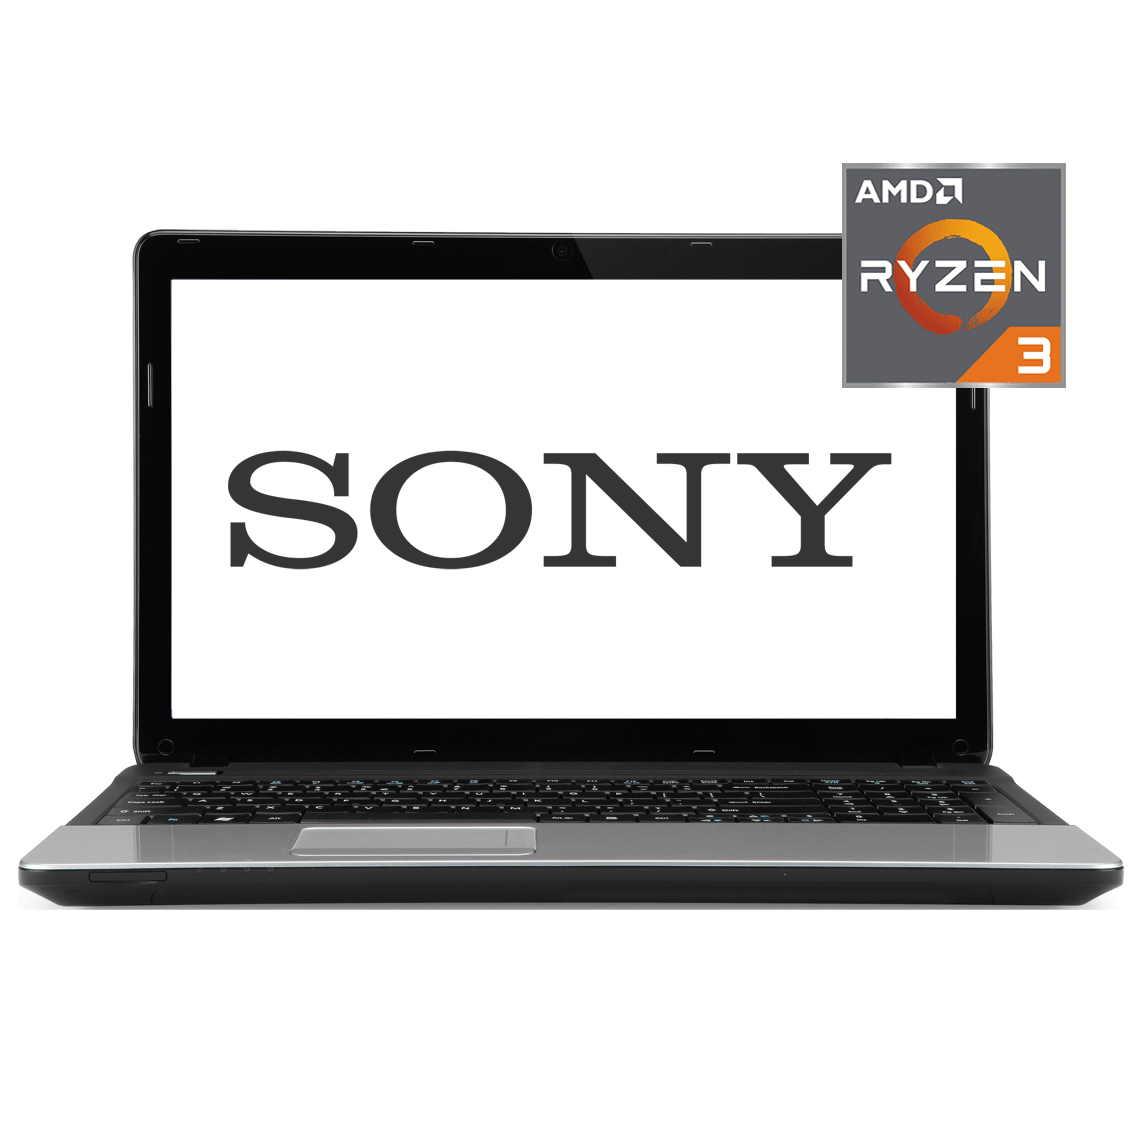 Sony - 15 inch AMD Ryzen 3